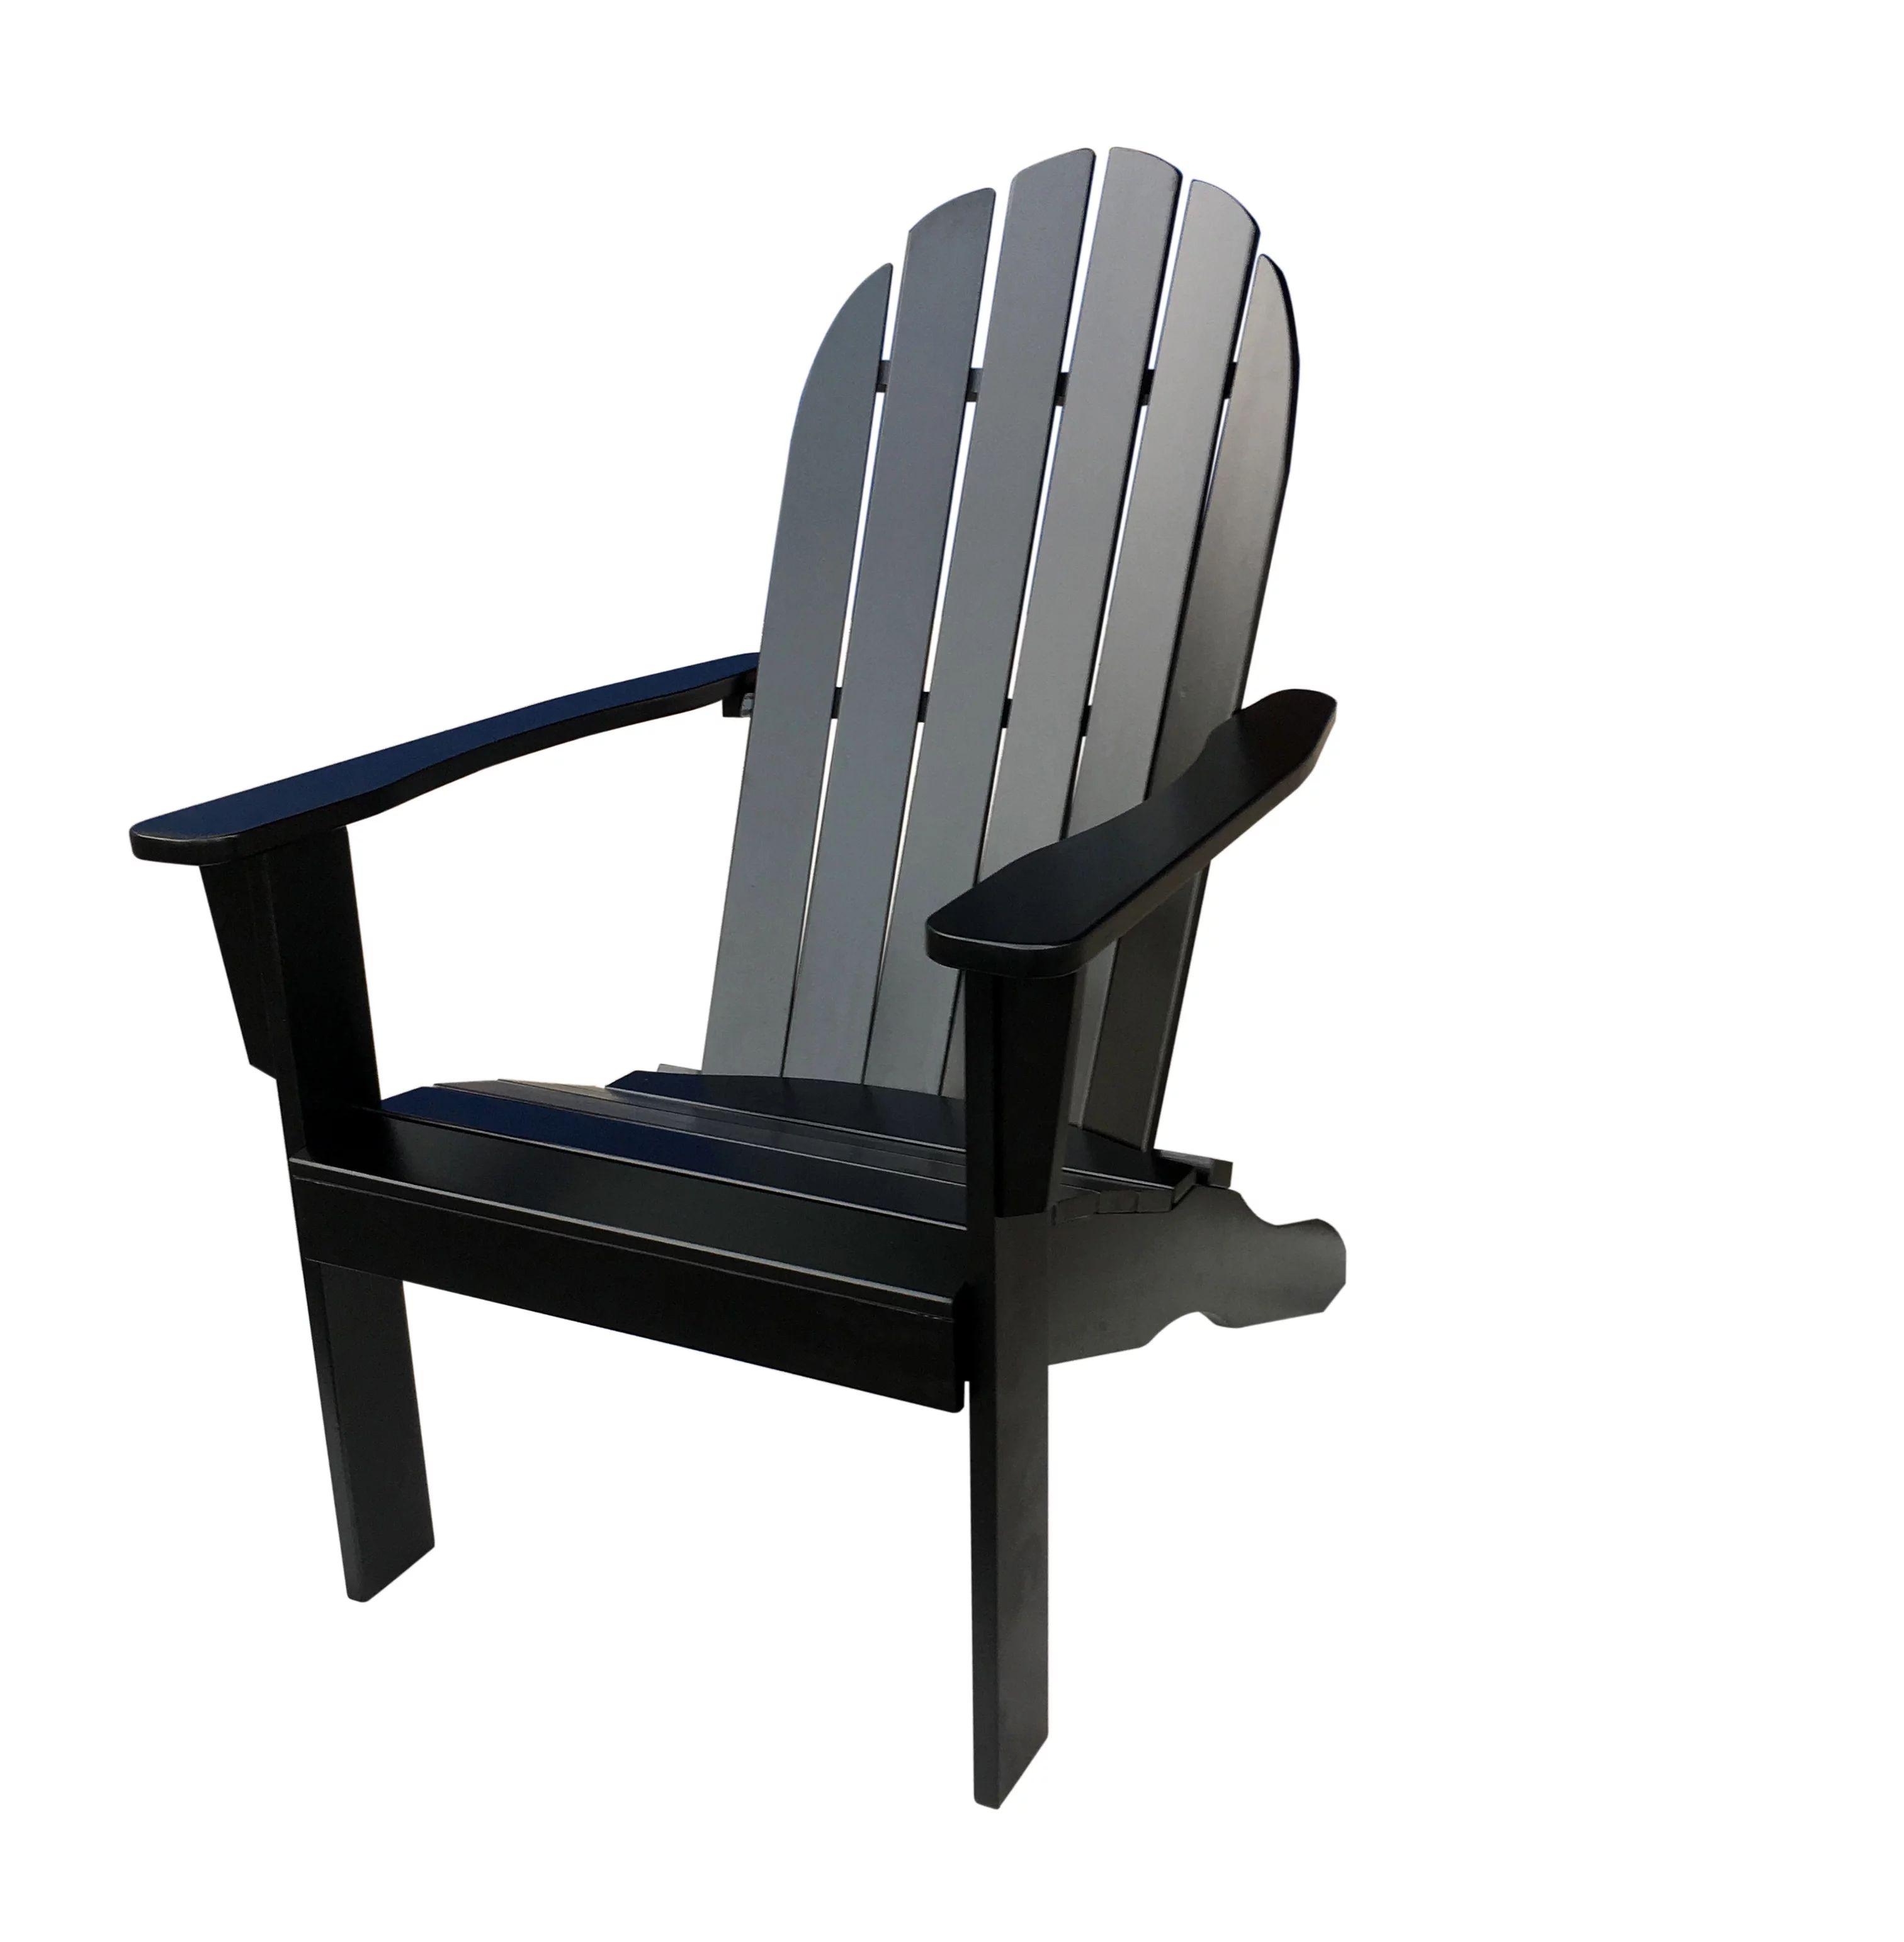 Mainstays Wood Outdoor Adirondack Chair, Black Color | Walmart (US)